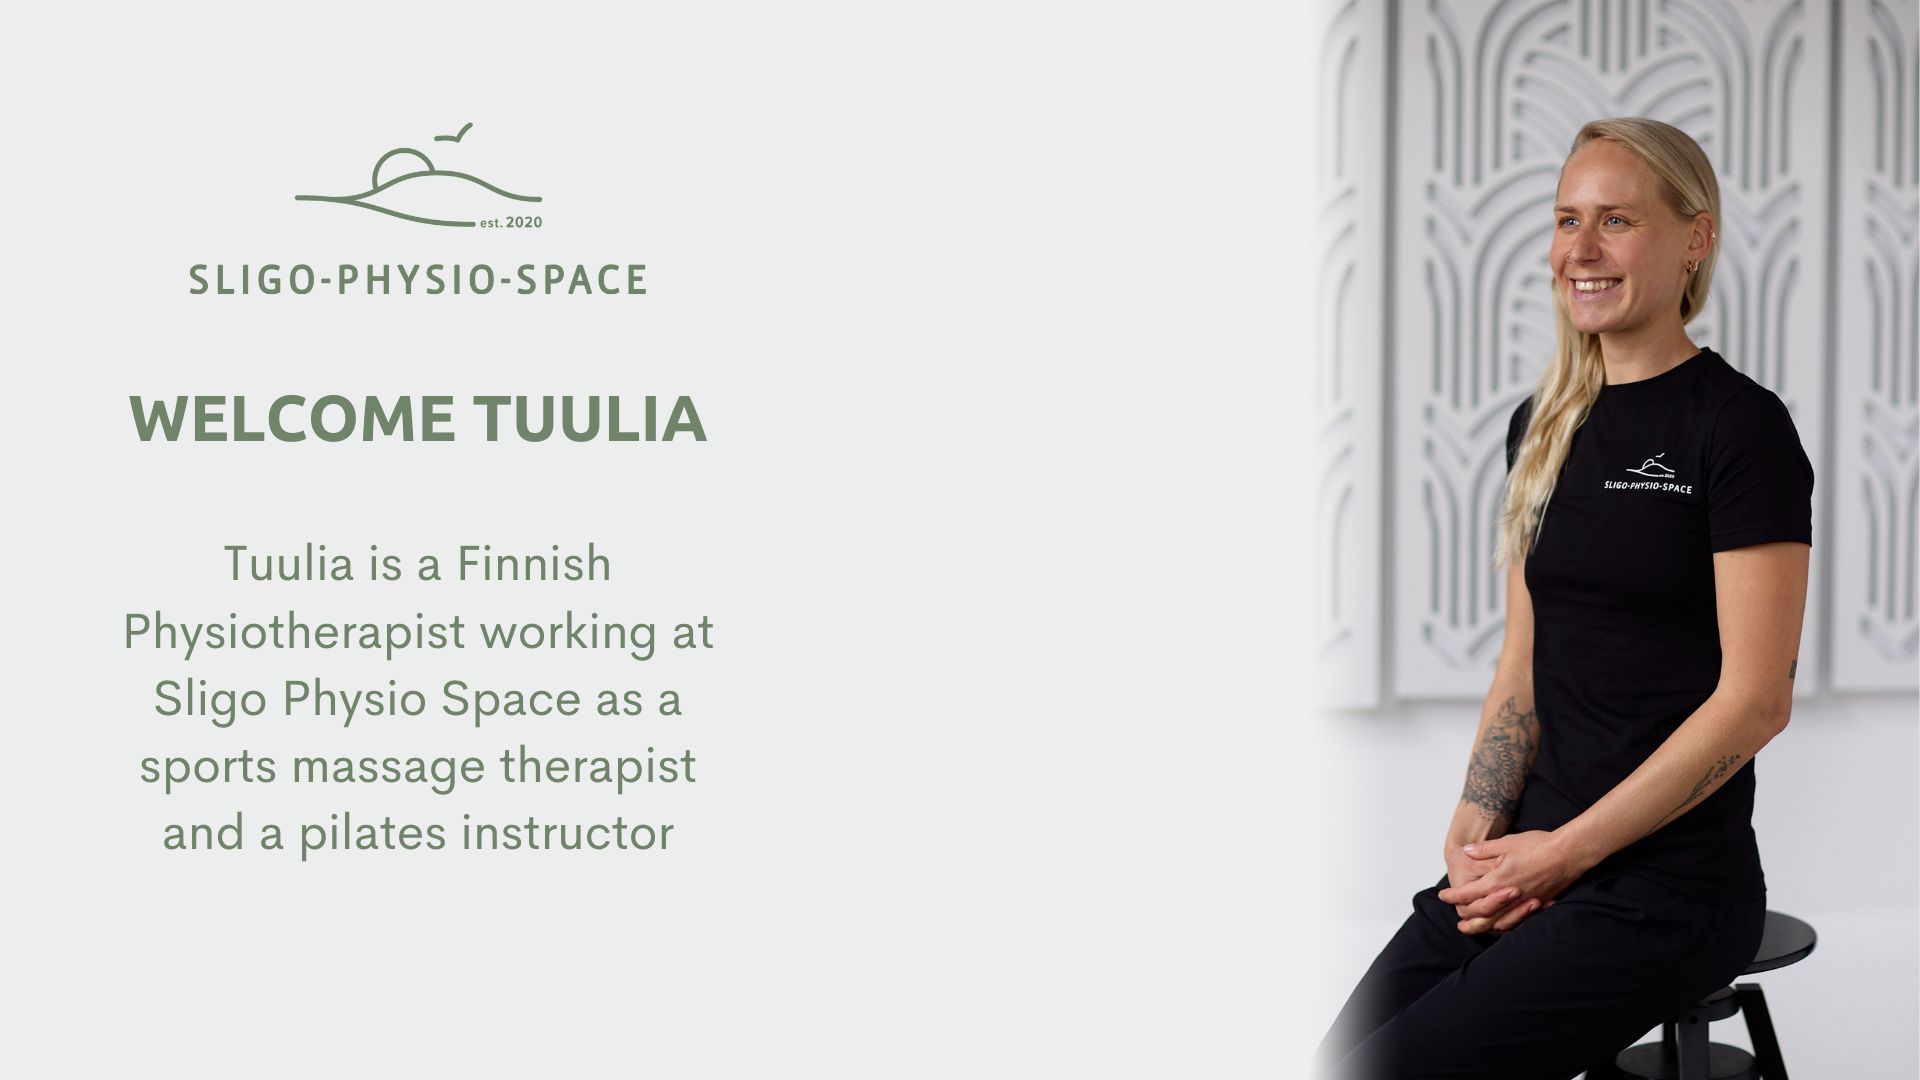 New Pilates teacher and physio at Sligo Physio Space, Tuulia